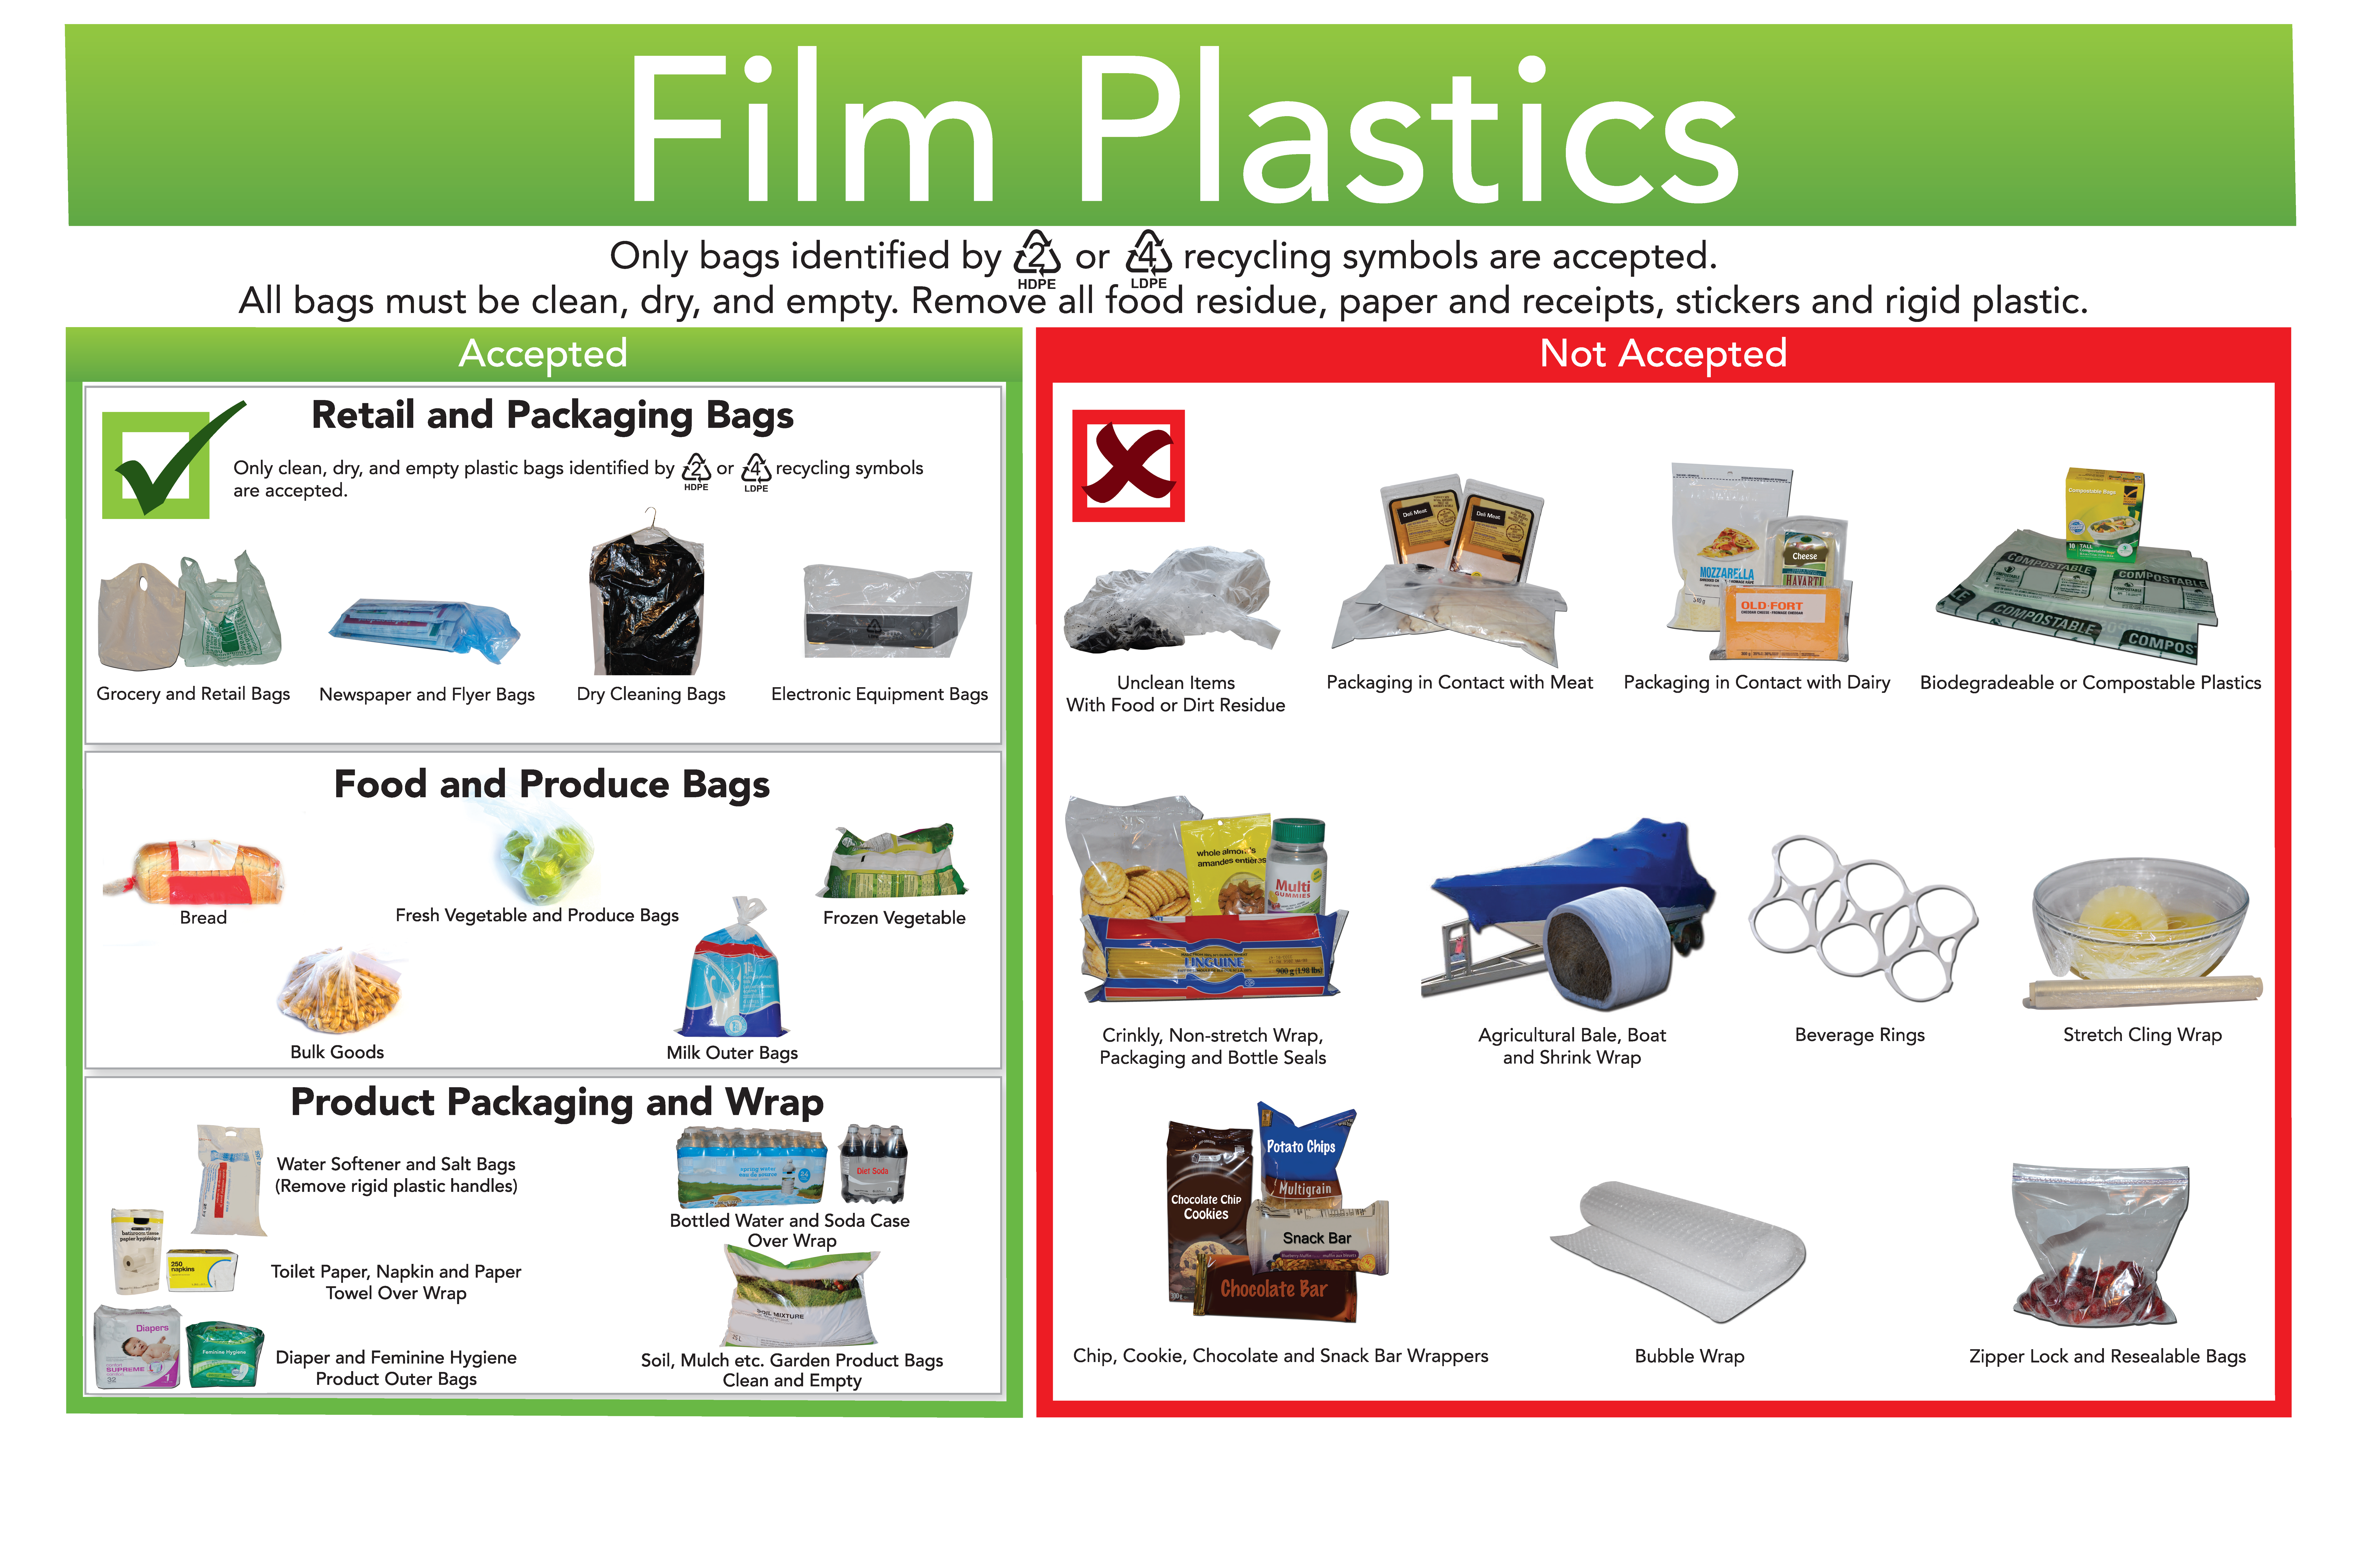 Film plastics recycling program 